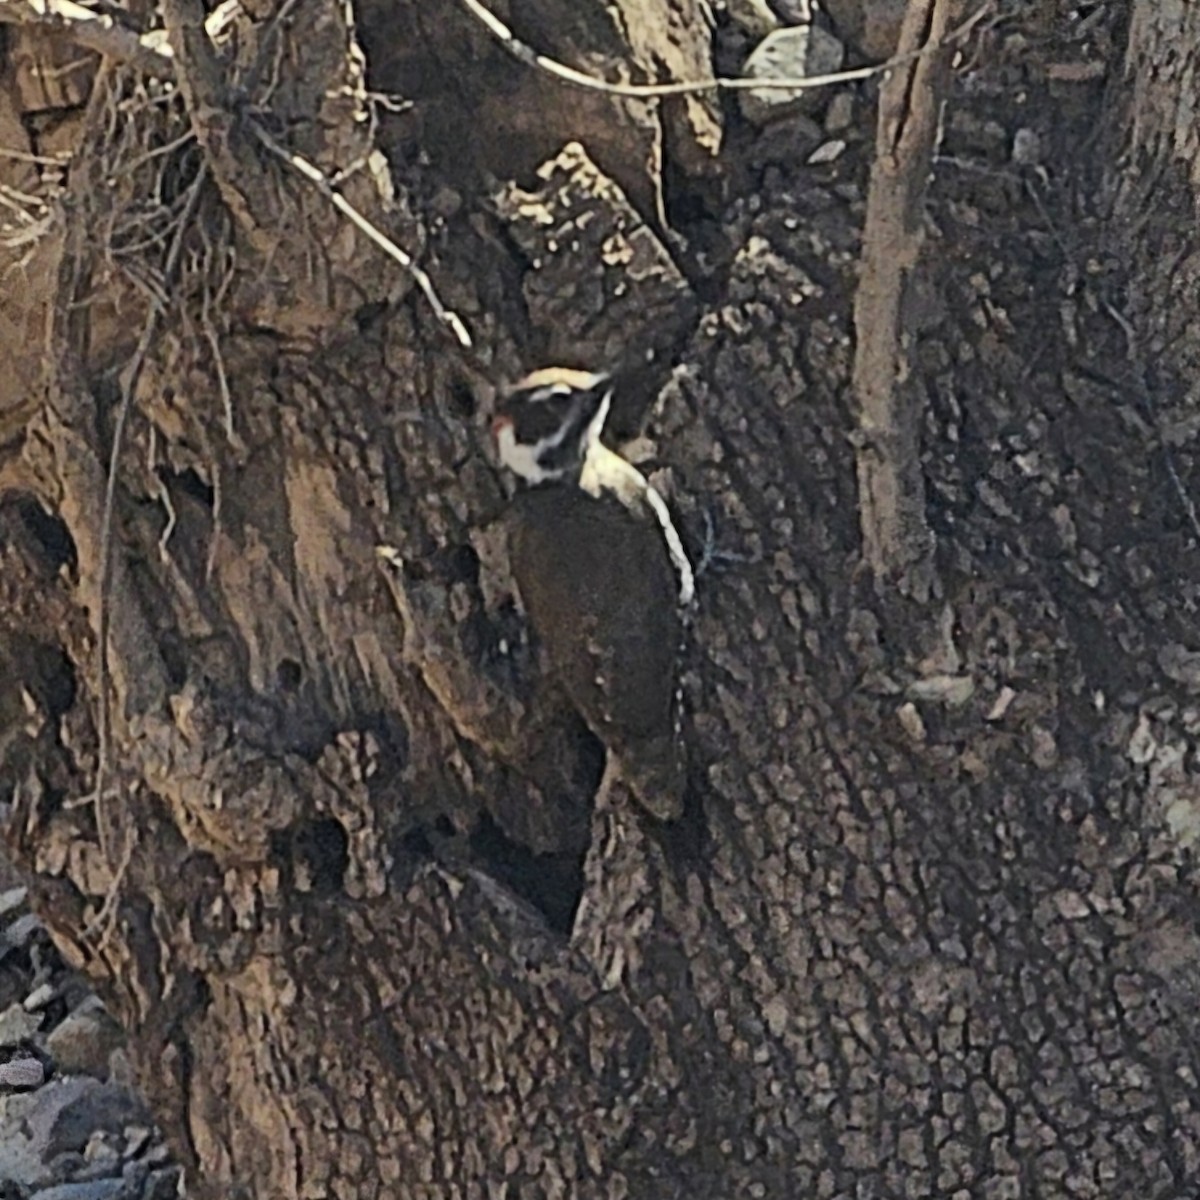 Arizona Woodpecker - Graeme Hinde